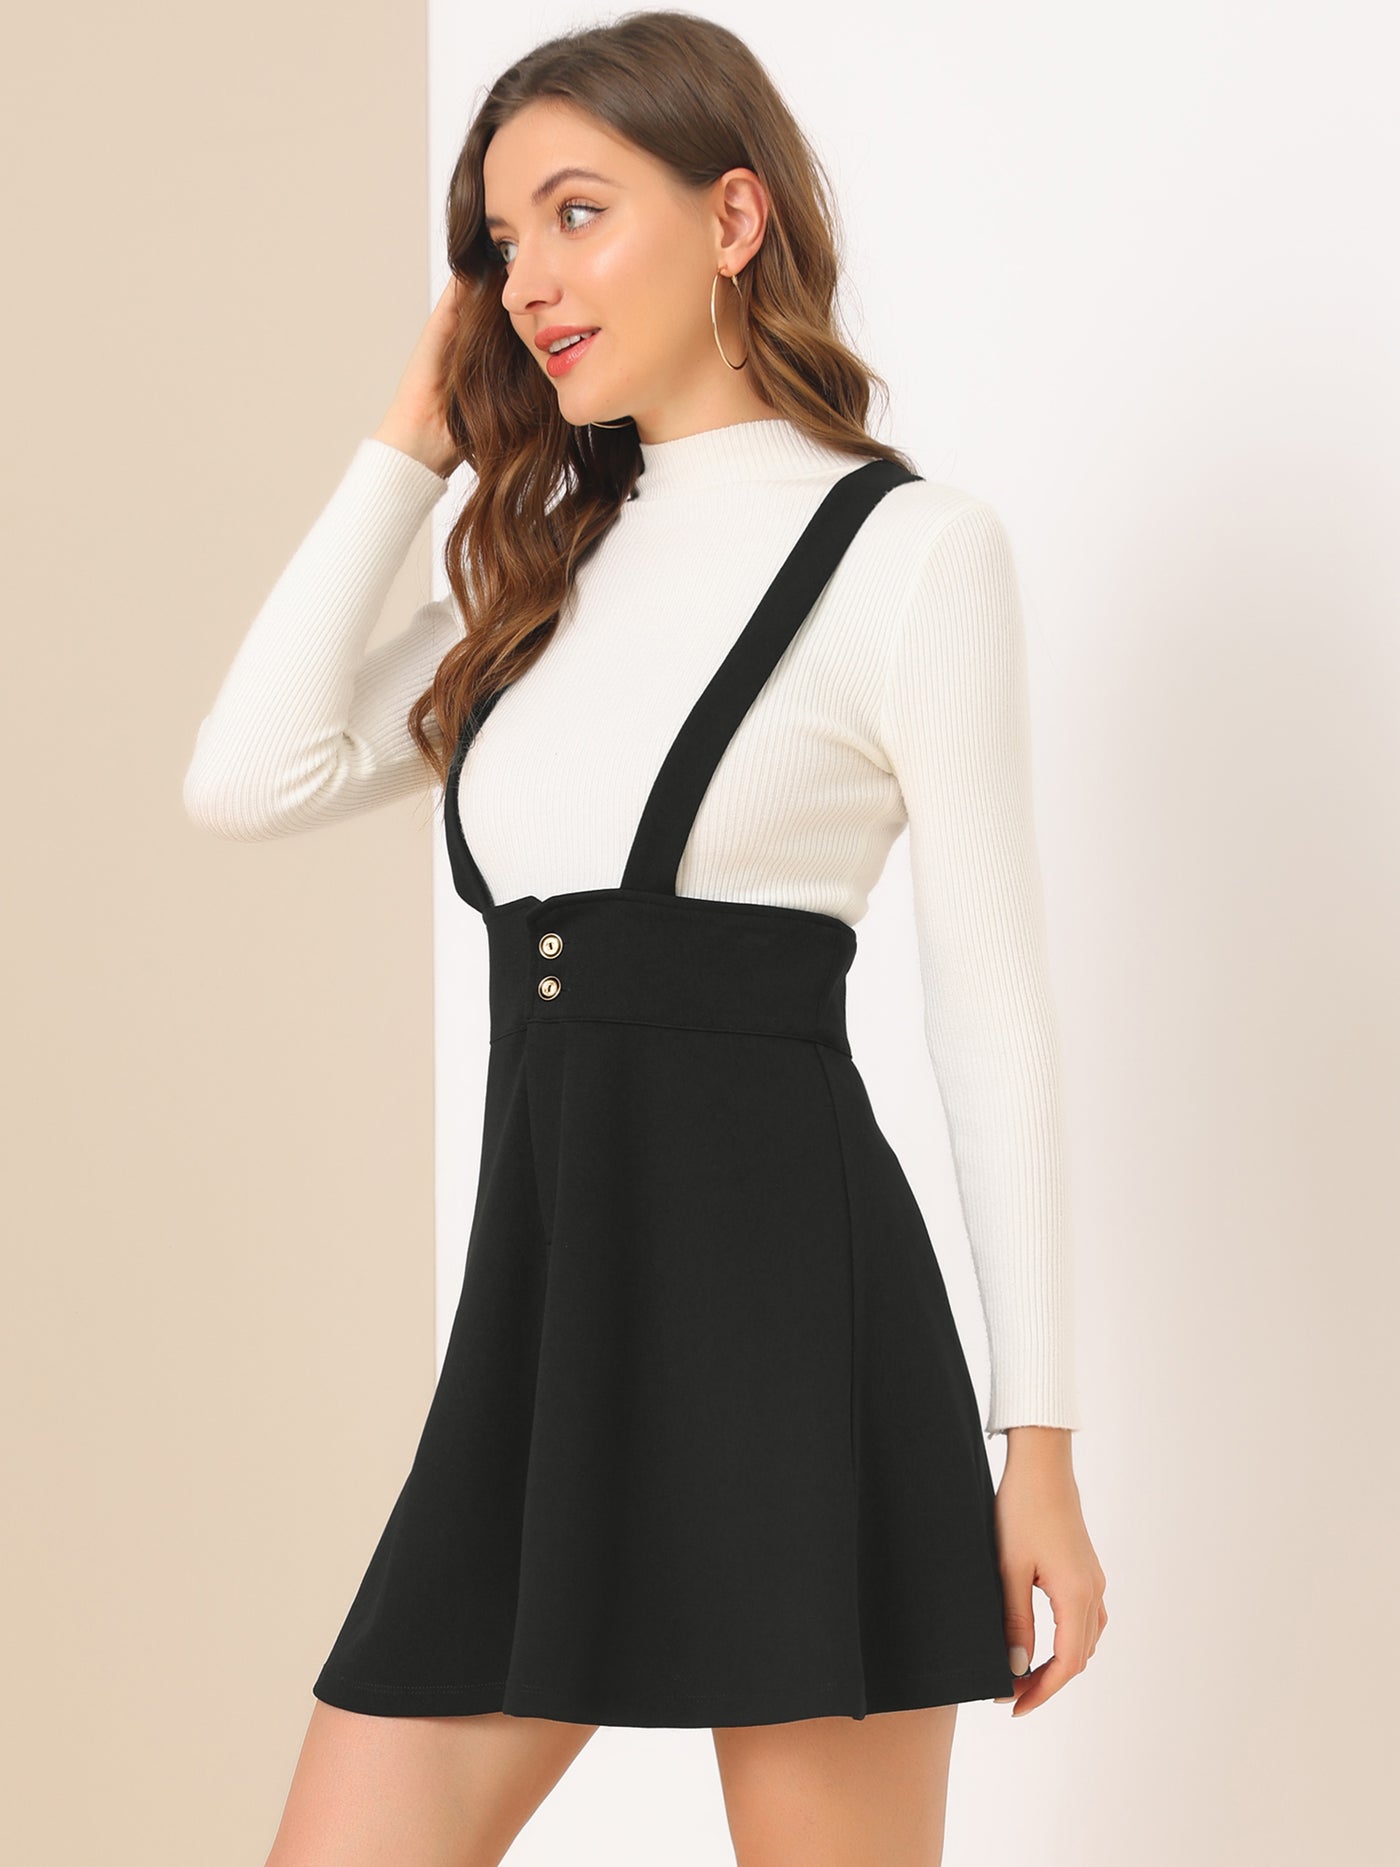 Allegra K Women's St Patrick's Day Overall Dress Adjustable Strap Fit And Flare Short Suspender Skirt